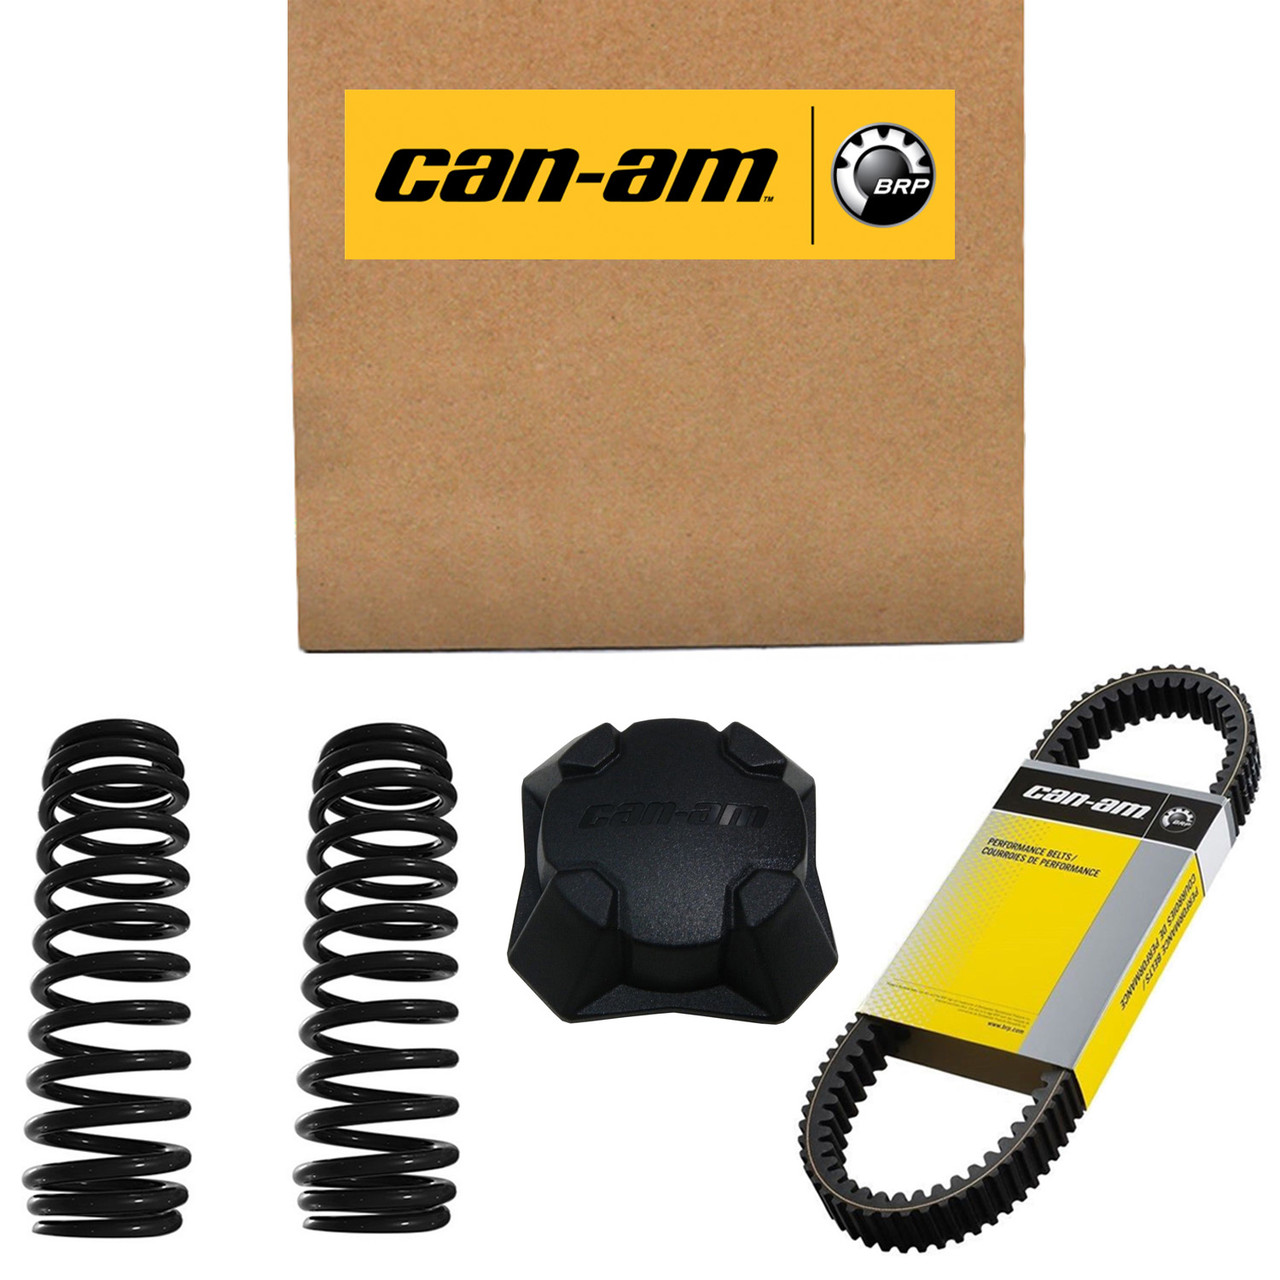 Can-Am New OEM Gear Box, 420686791